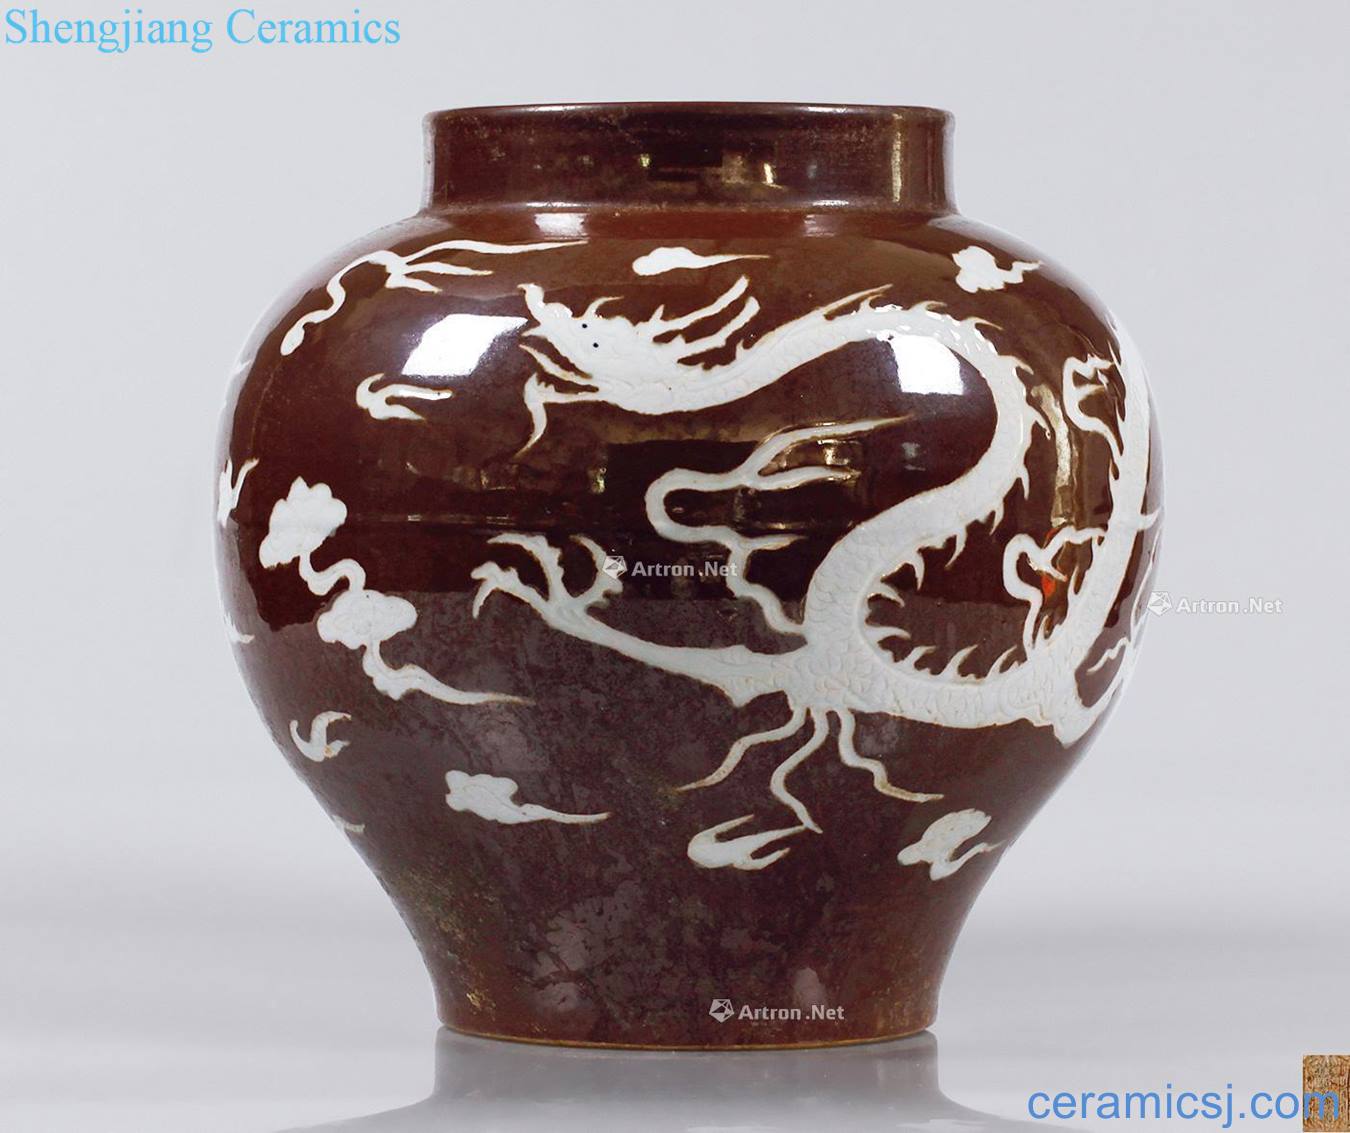 Sauce glaze dragon tank in early Ming dynasty